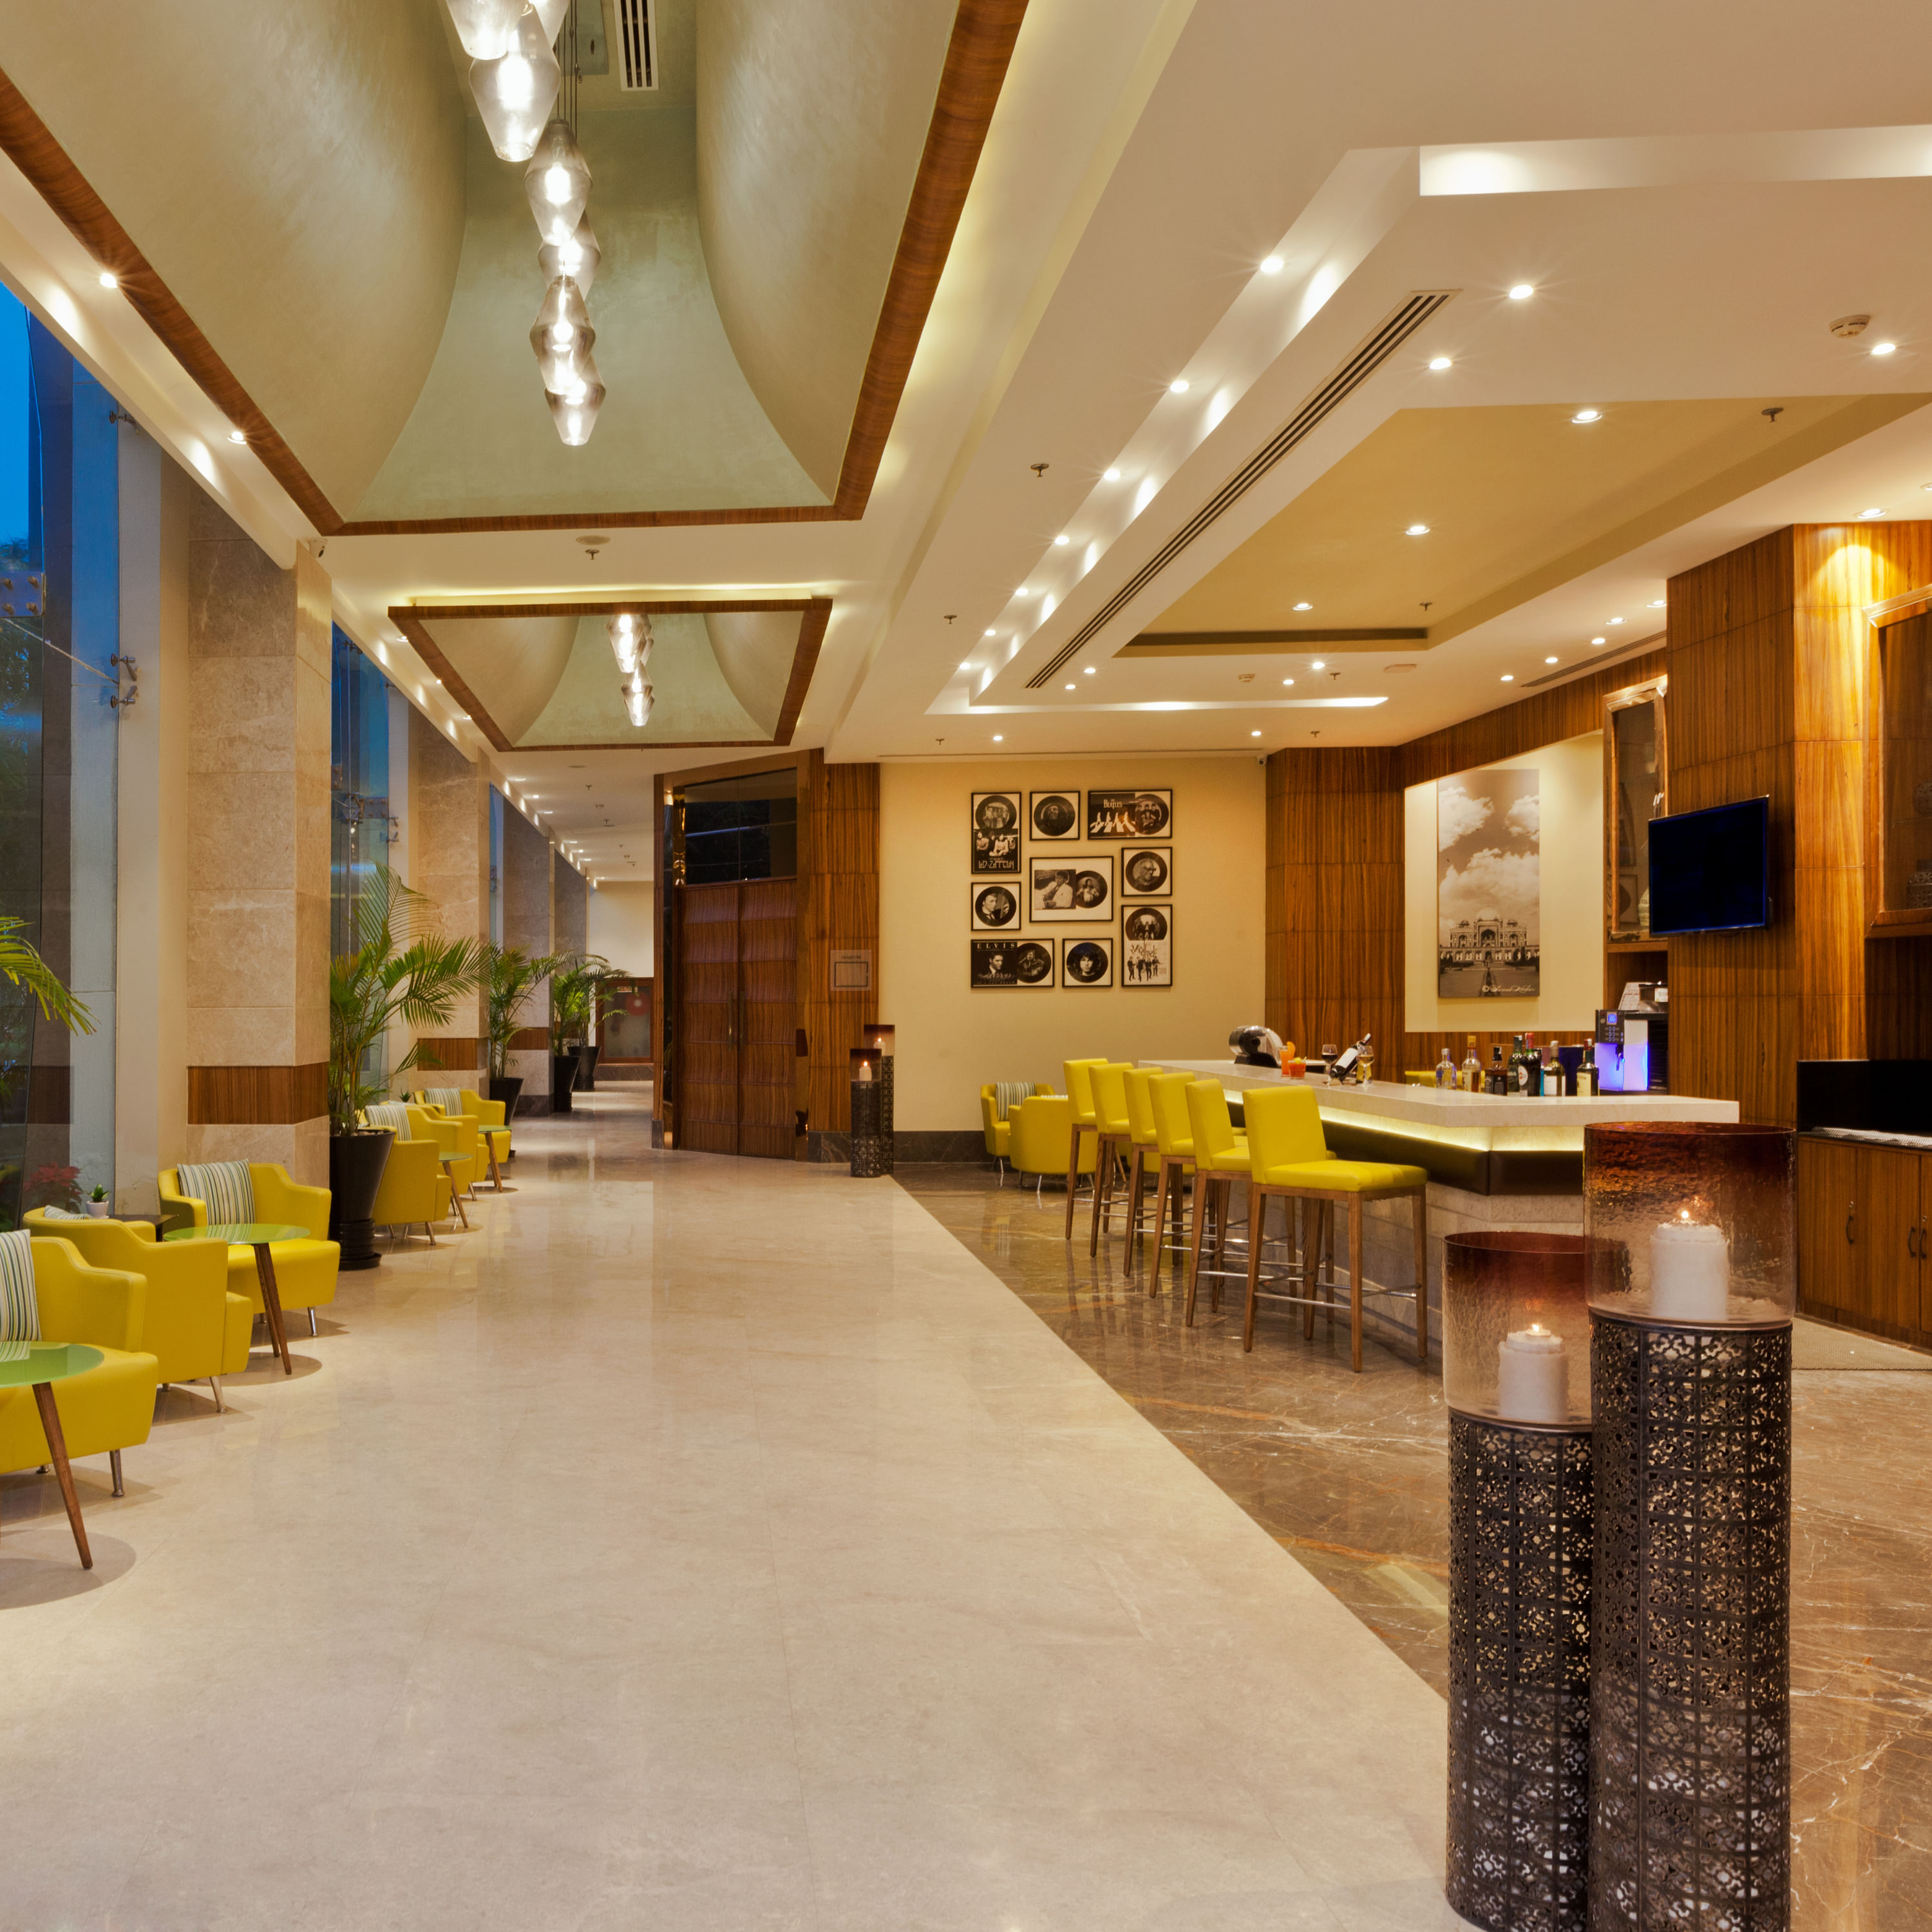 Lemon Tree Hotel in Sohna Road, Gurgaon